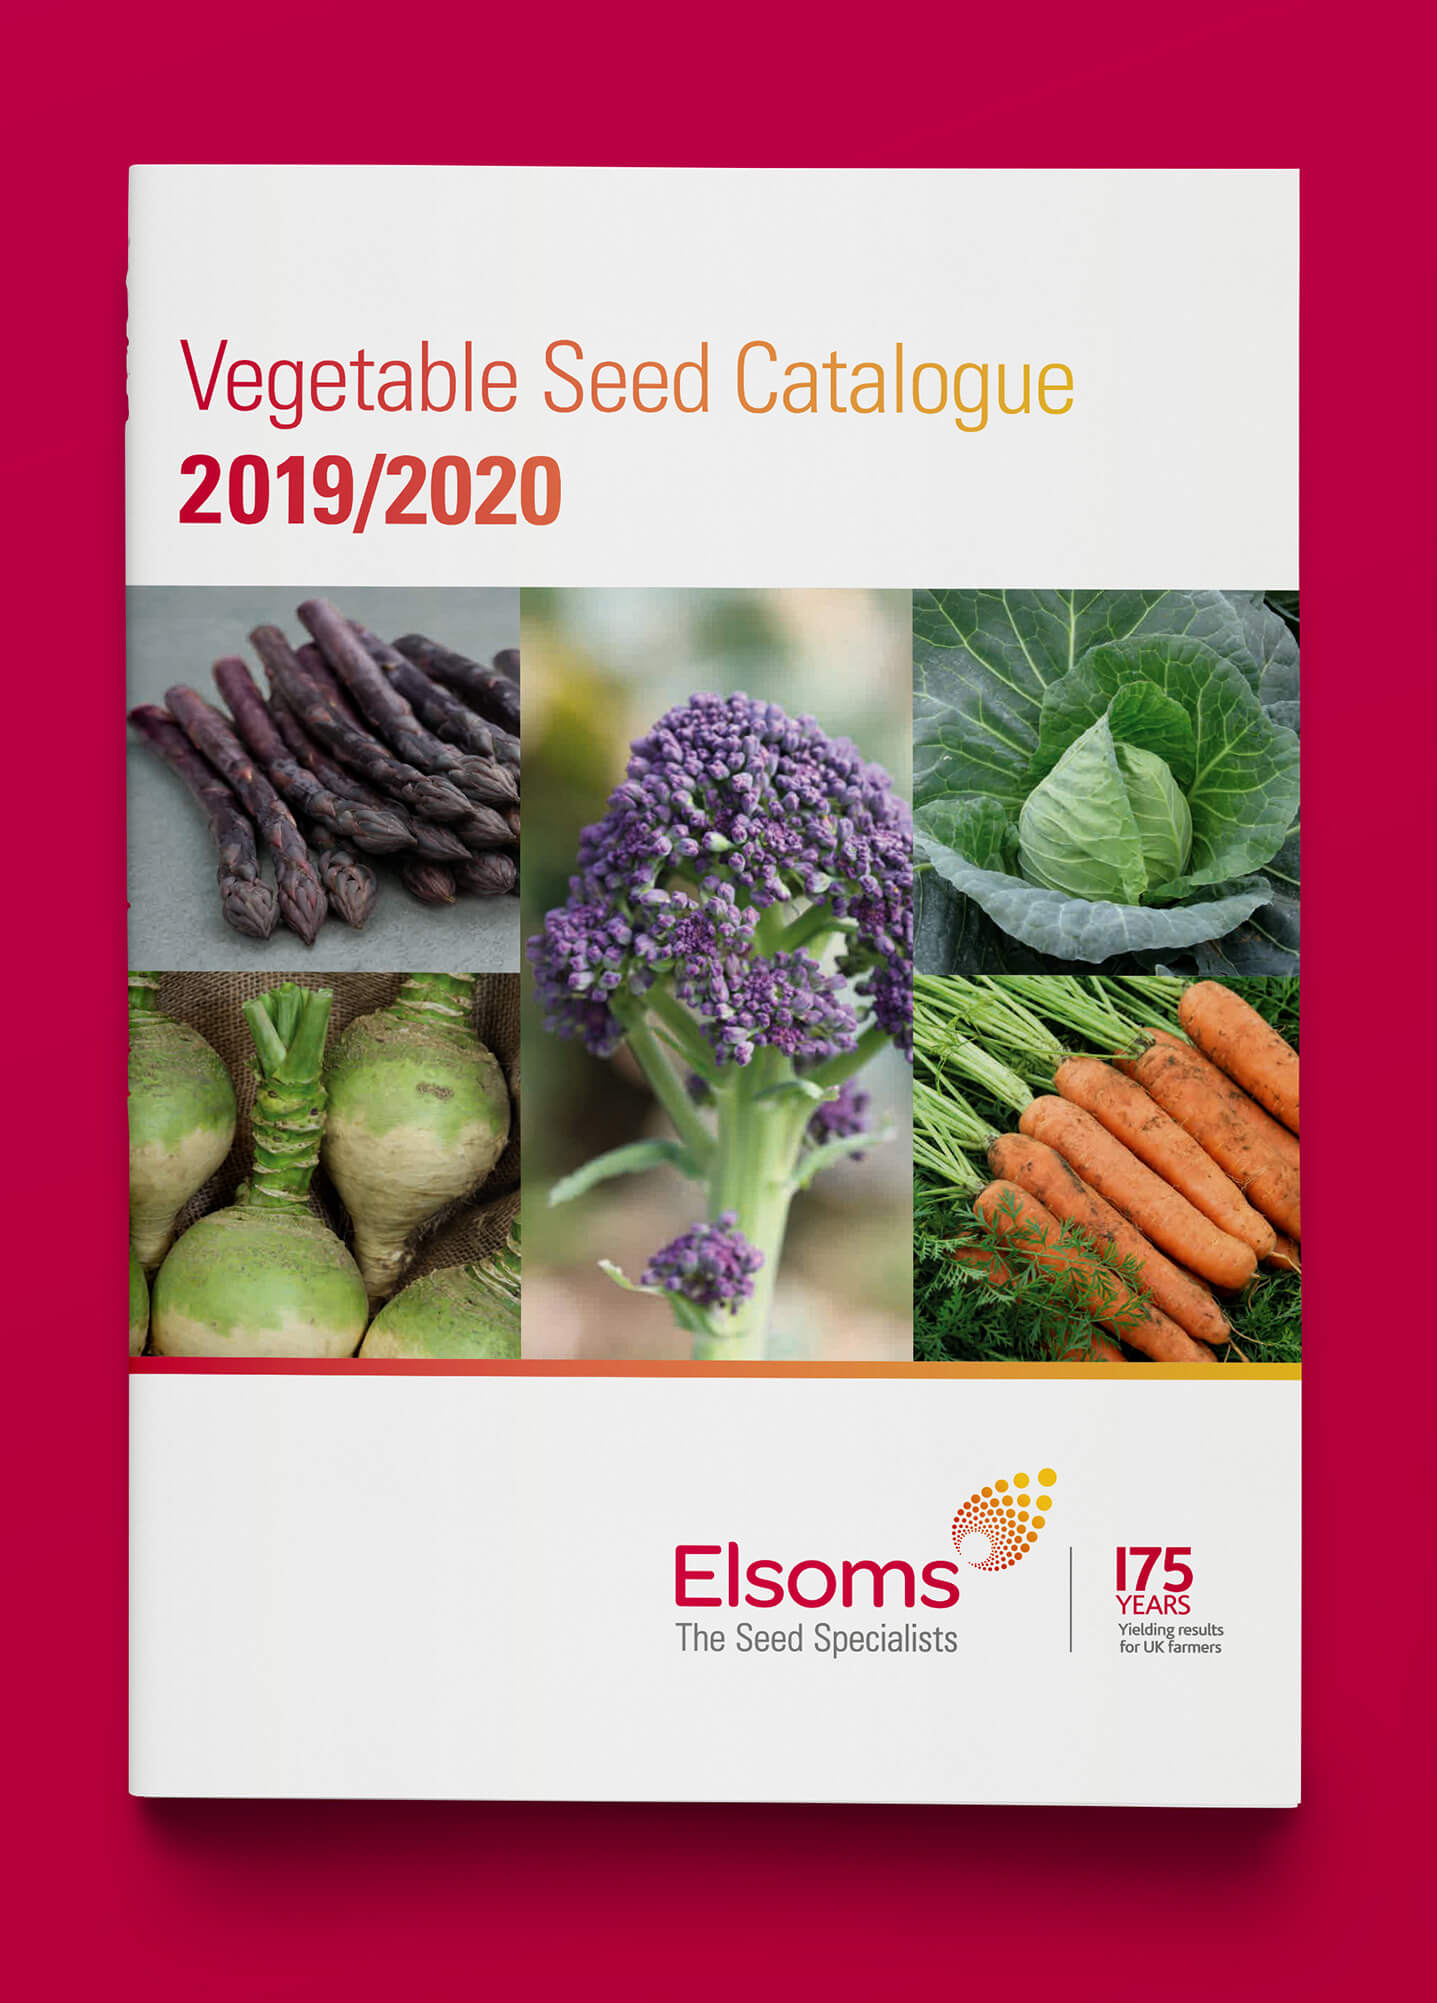 Elsoms Seeds Case Study